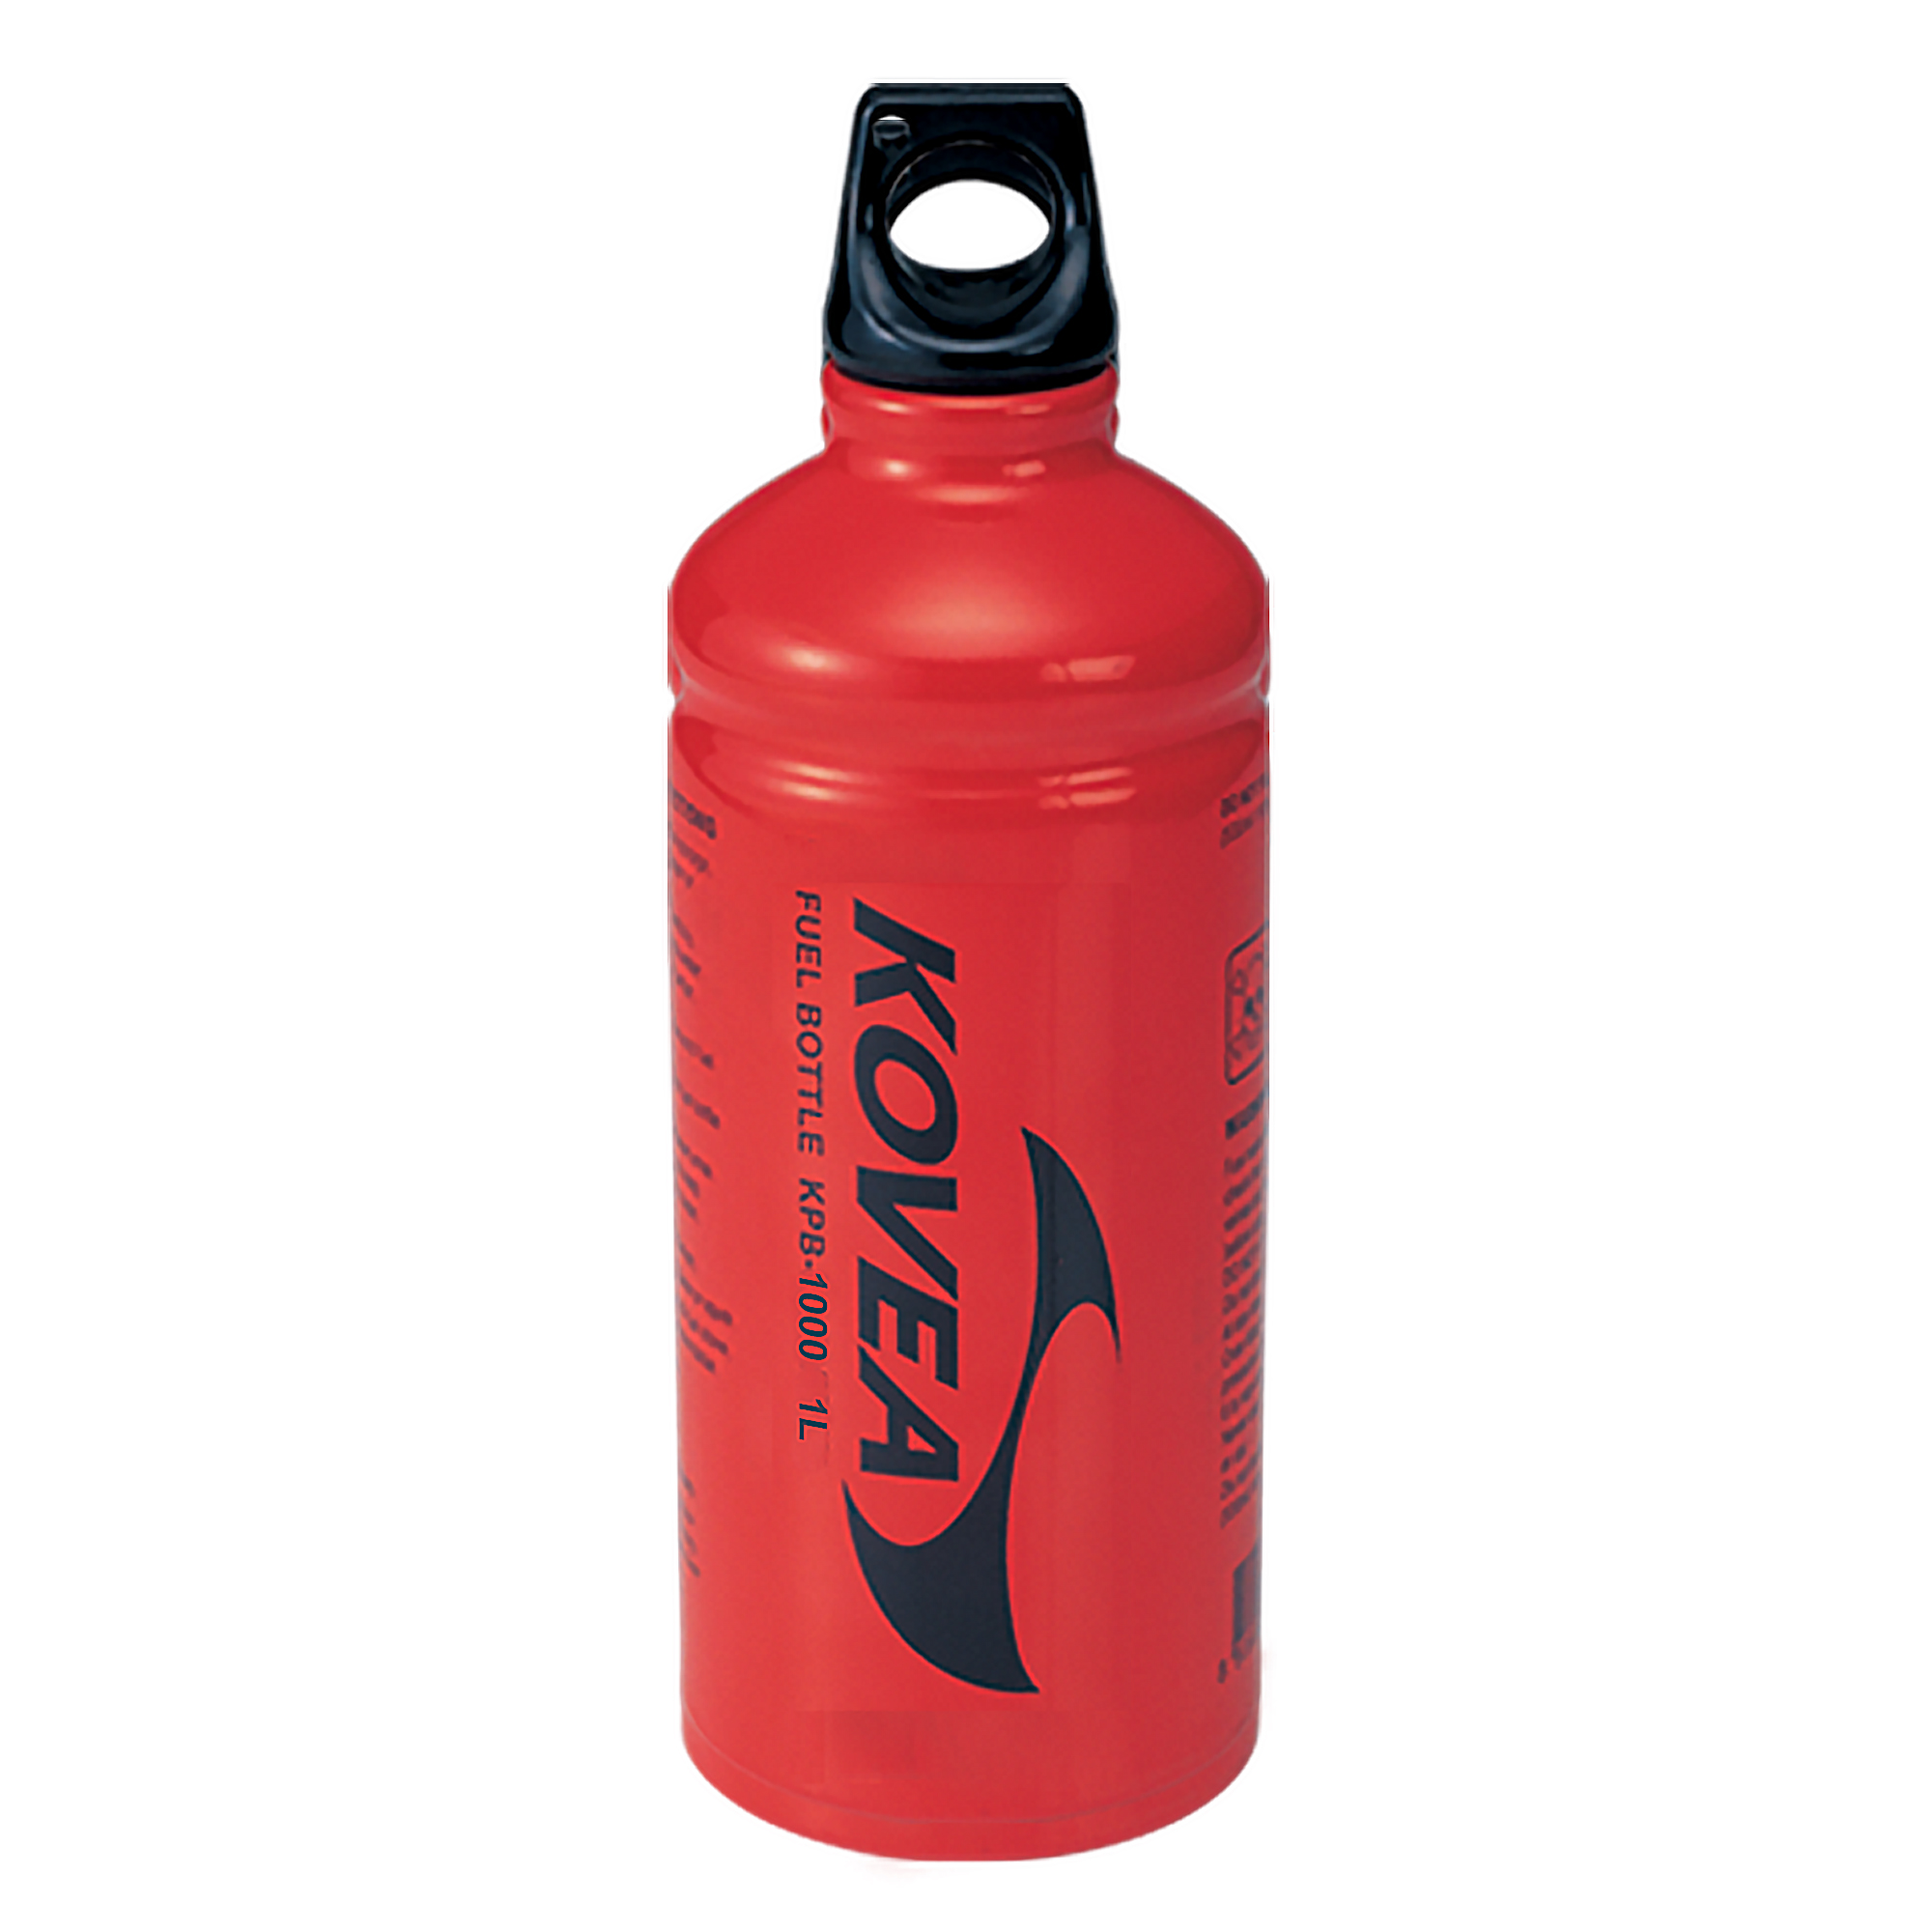 Фляга для топлива Kovea Fuel bottle 1л - фото 1